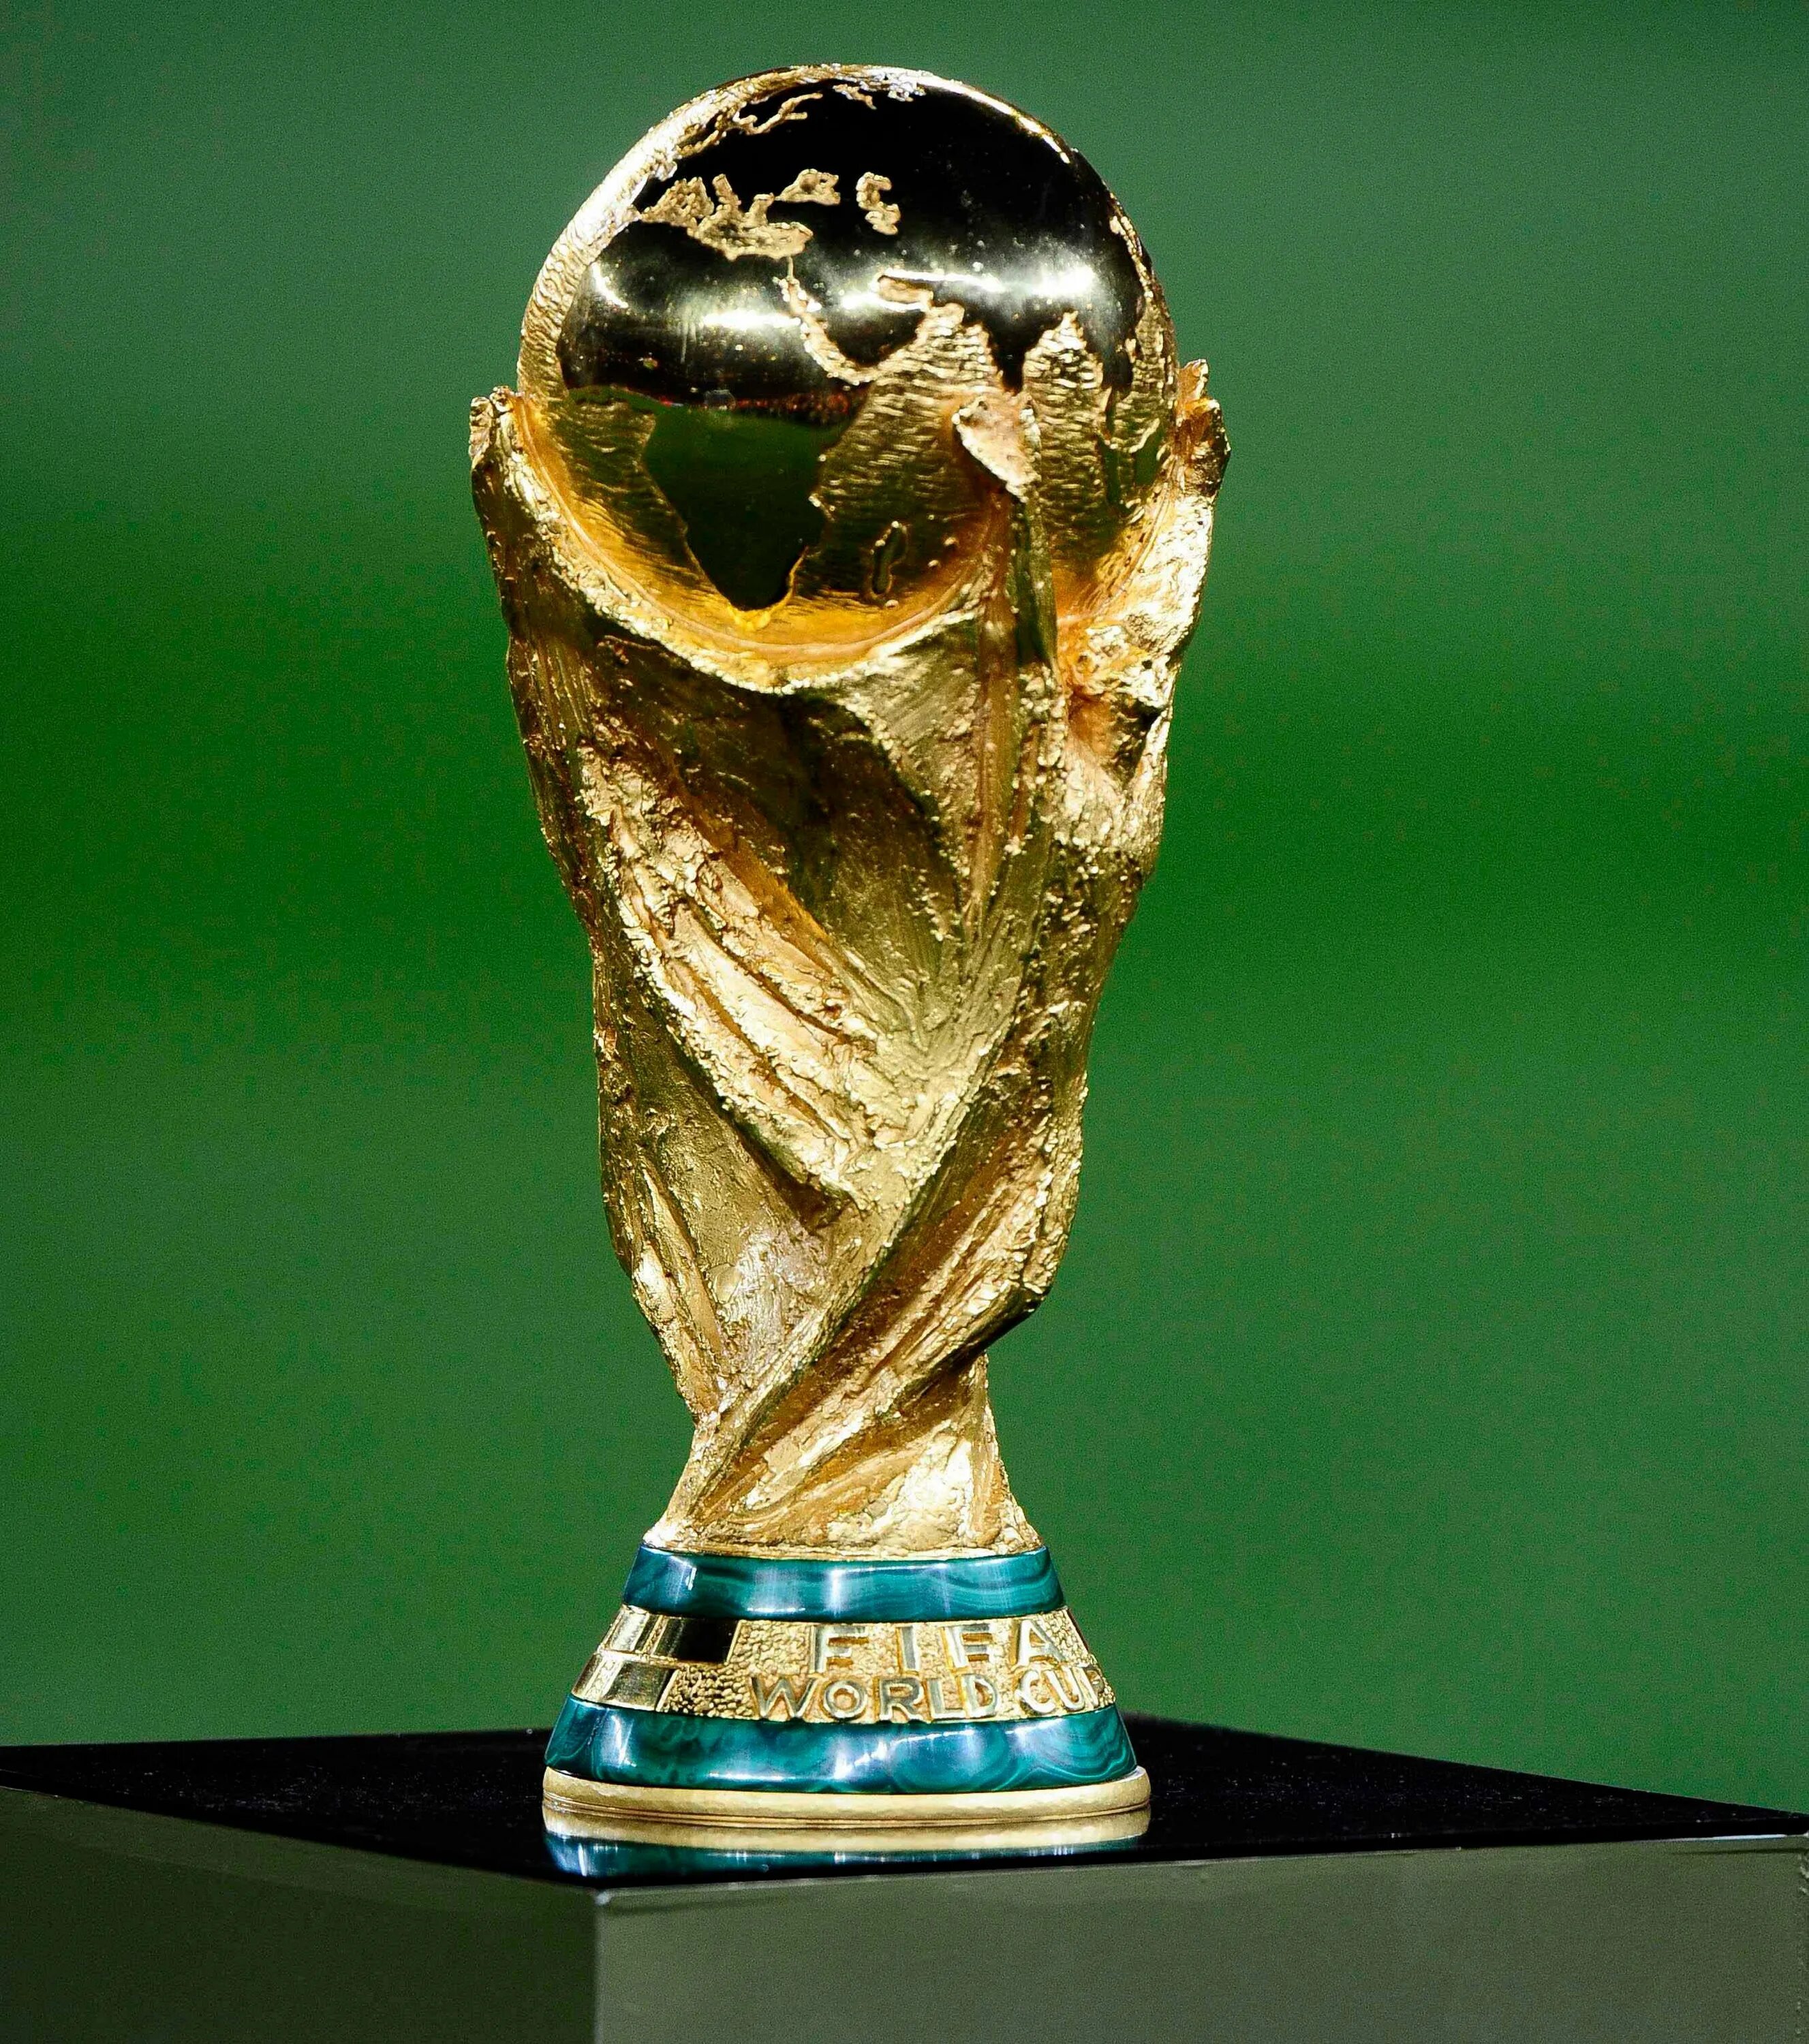 Coupe du monde Qatar 2022. World Cup Coupe du monde. Кубок по футболу. Футбол кубок рамфорда